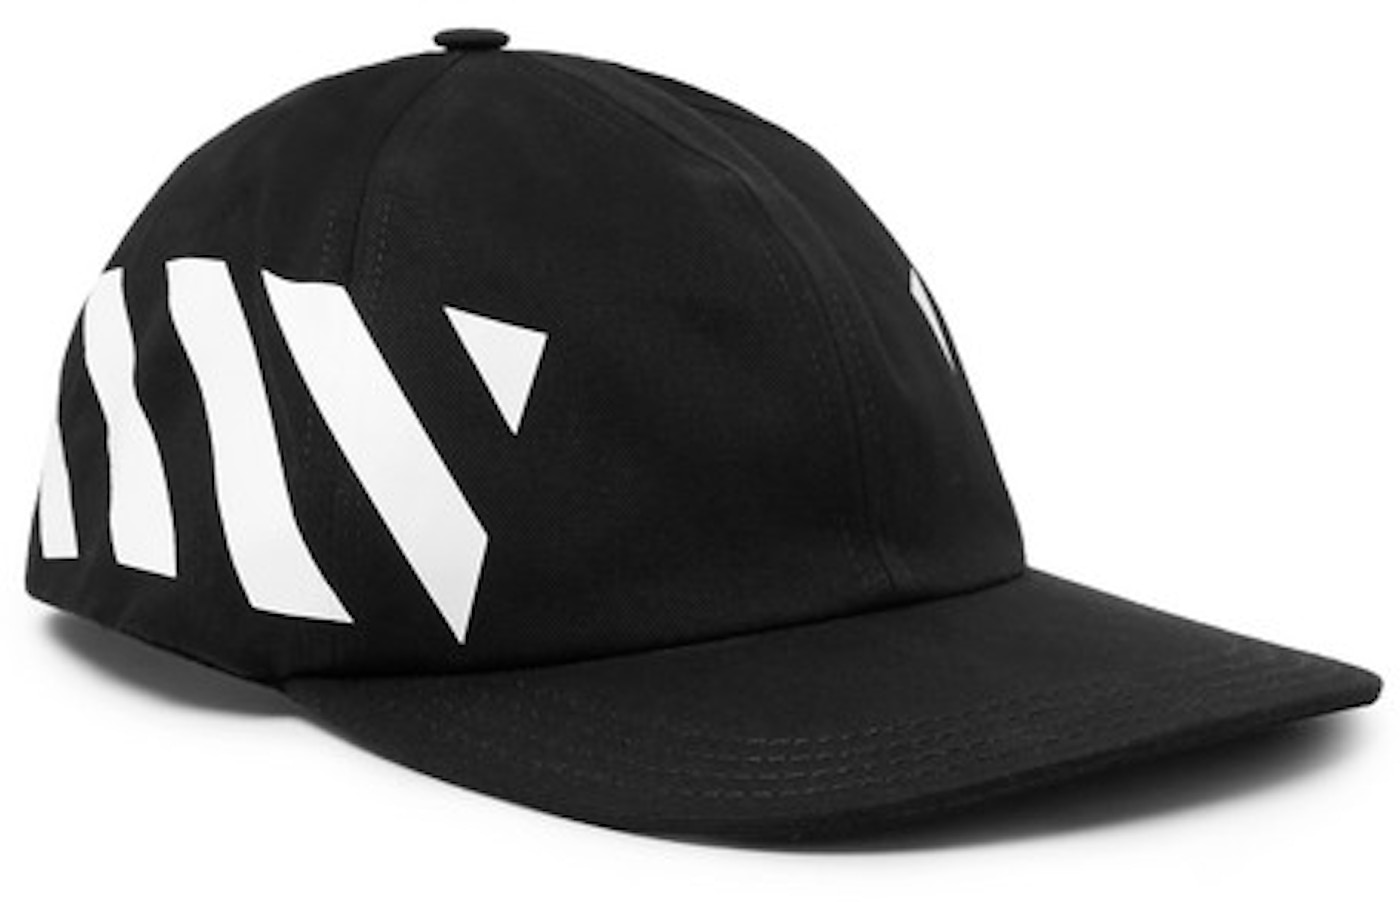 OFF-WHITE Striped Diag Hat Black/White - SS19